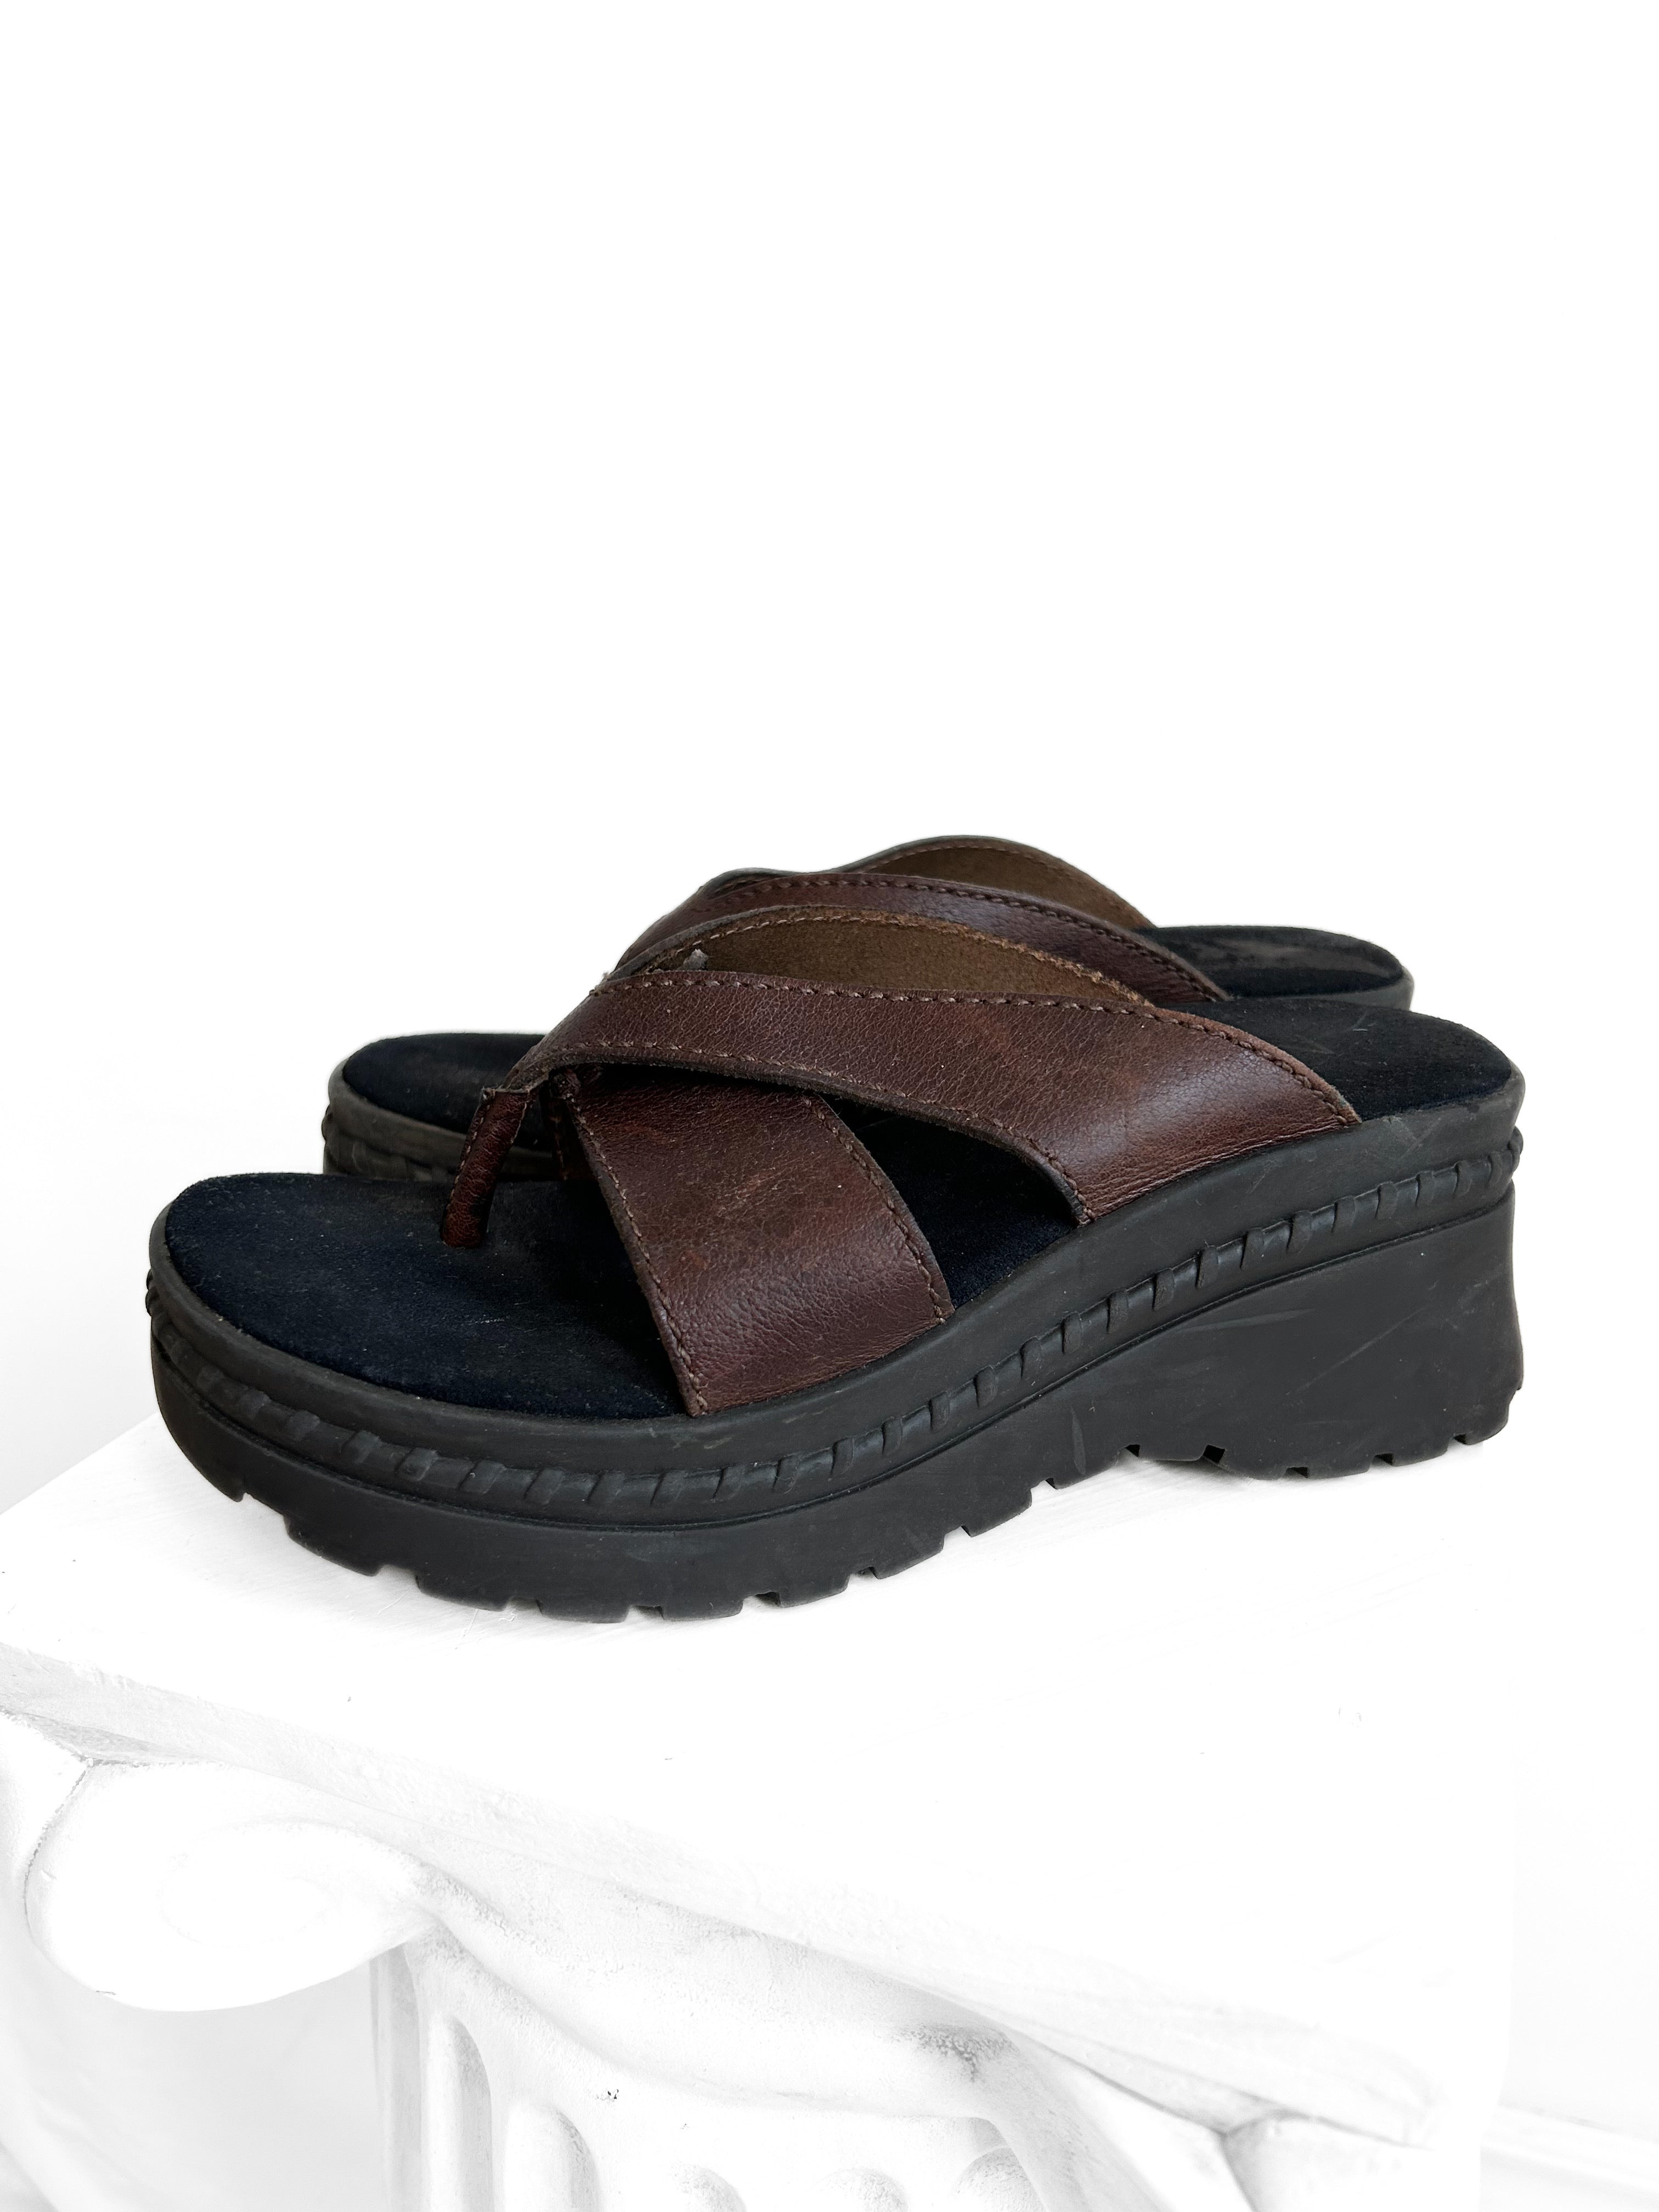 Y2K Brown Leather Platform Sandals, Size 6, Made in Brazil